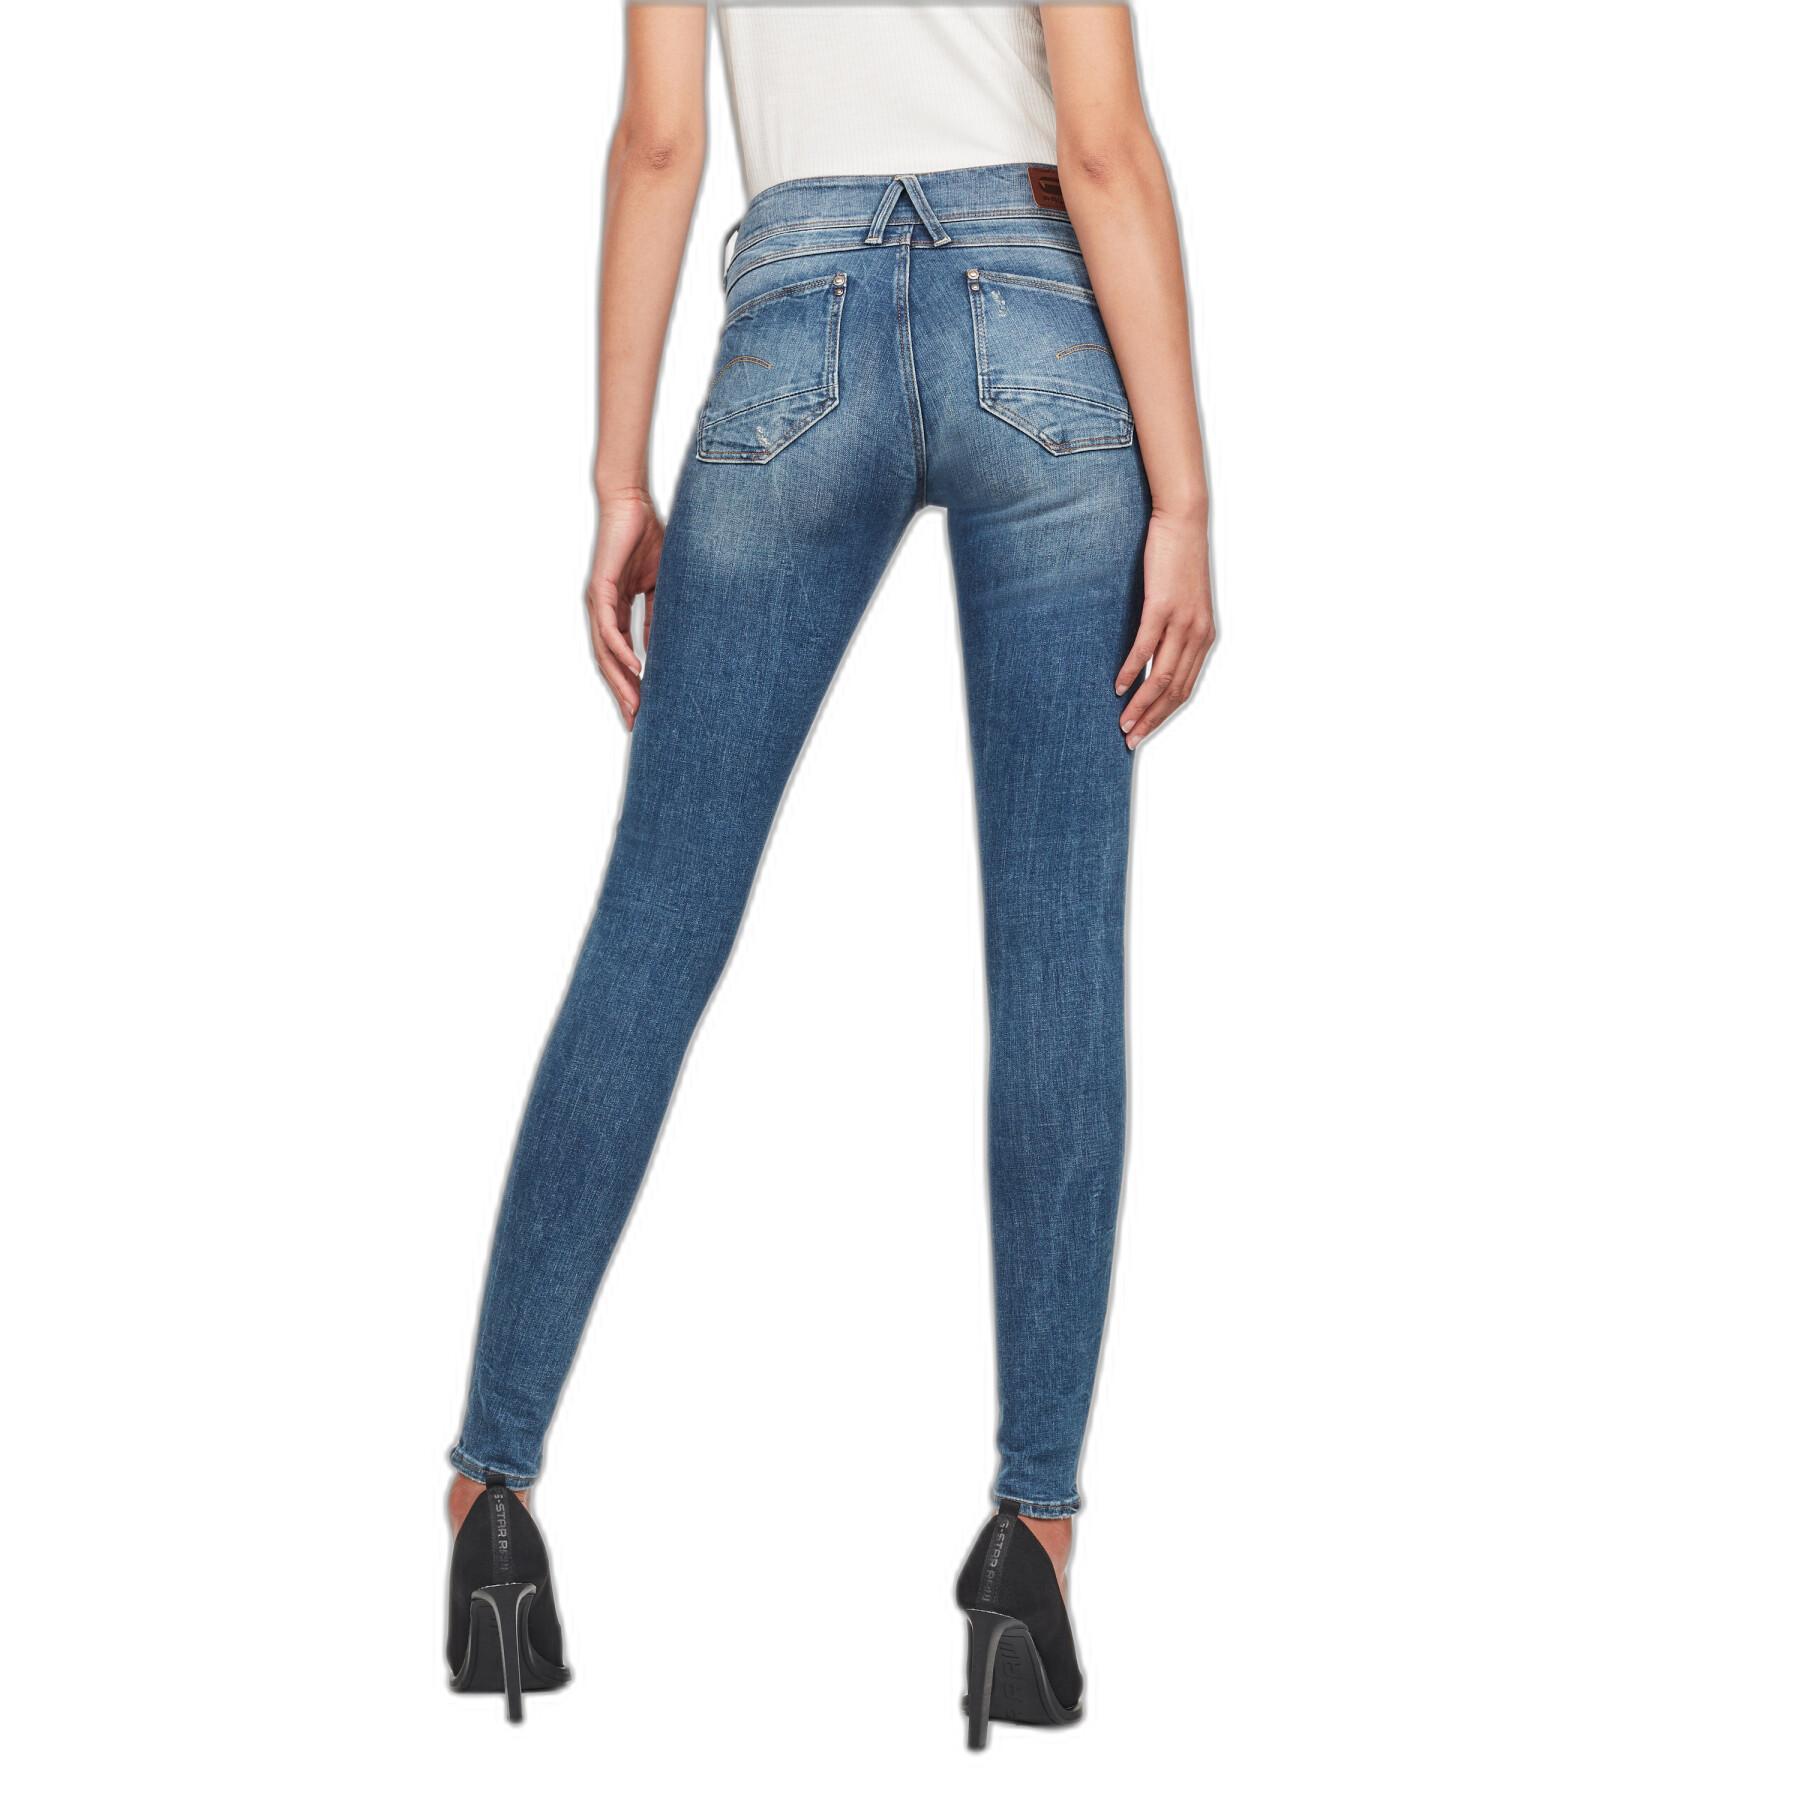 Jeans super skinny femme G-Star Lynn Mid